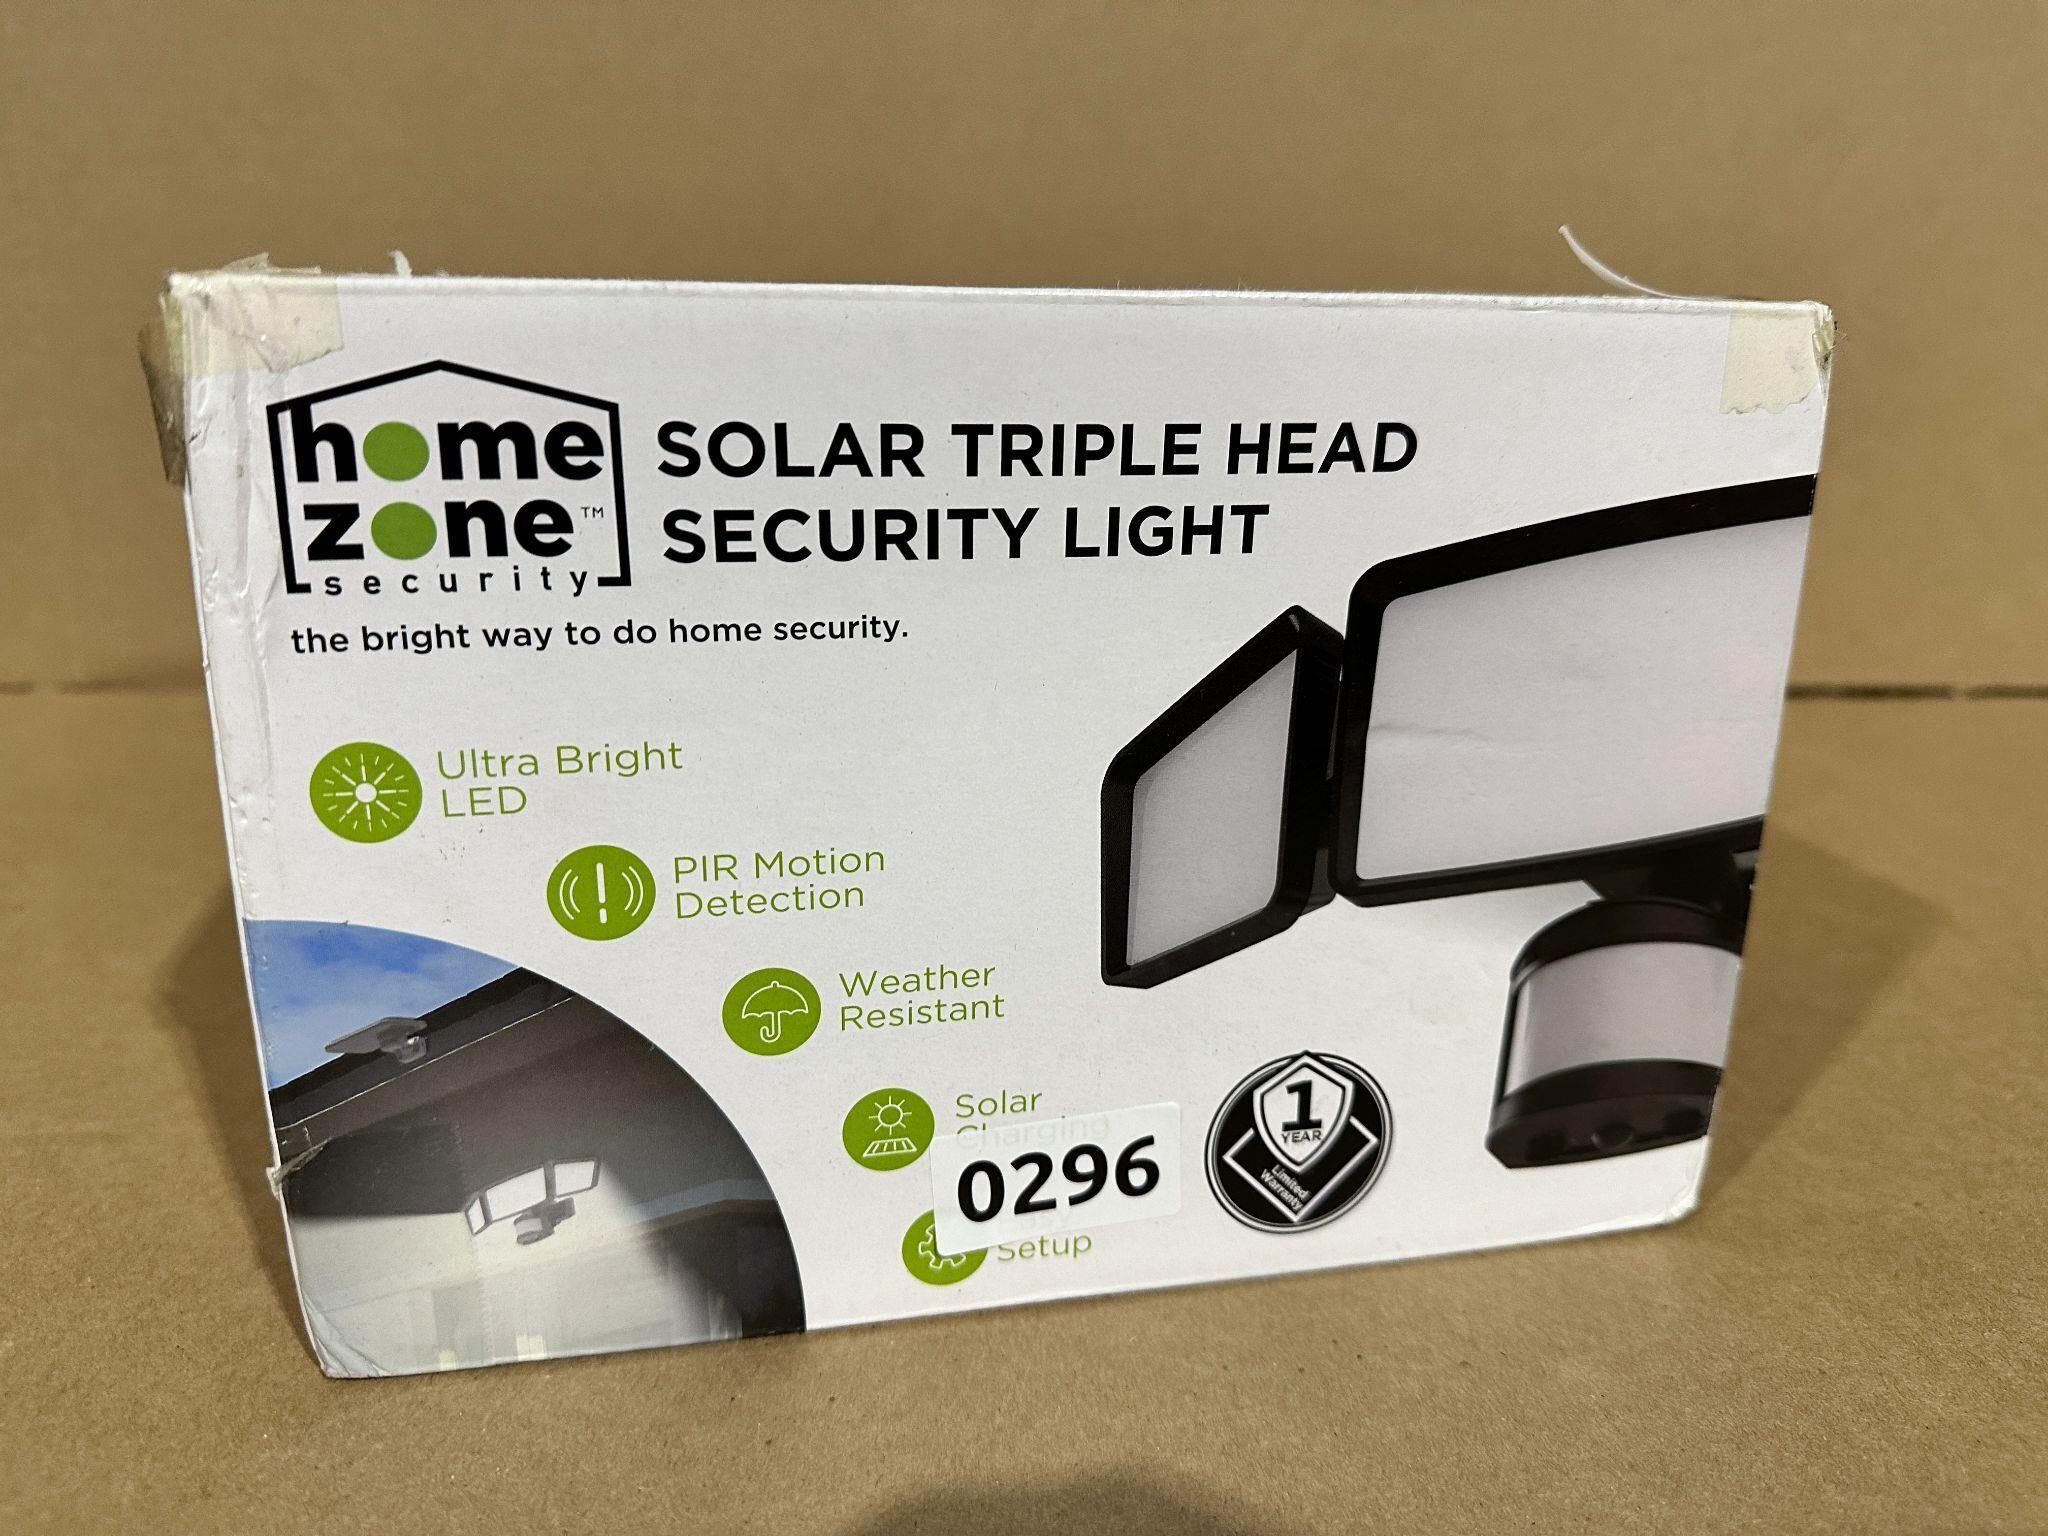 NEW home zone solar triple head security light